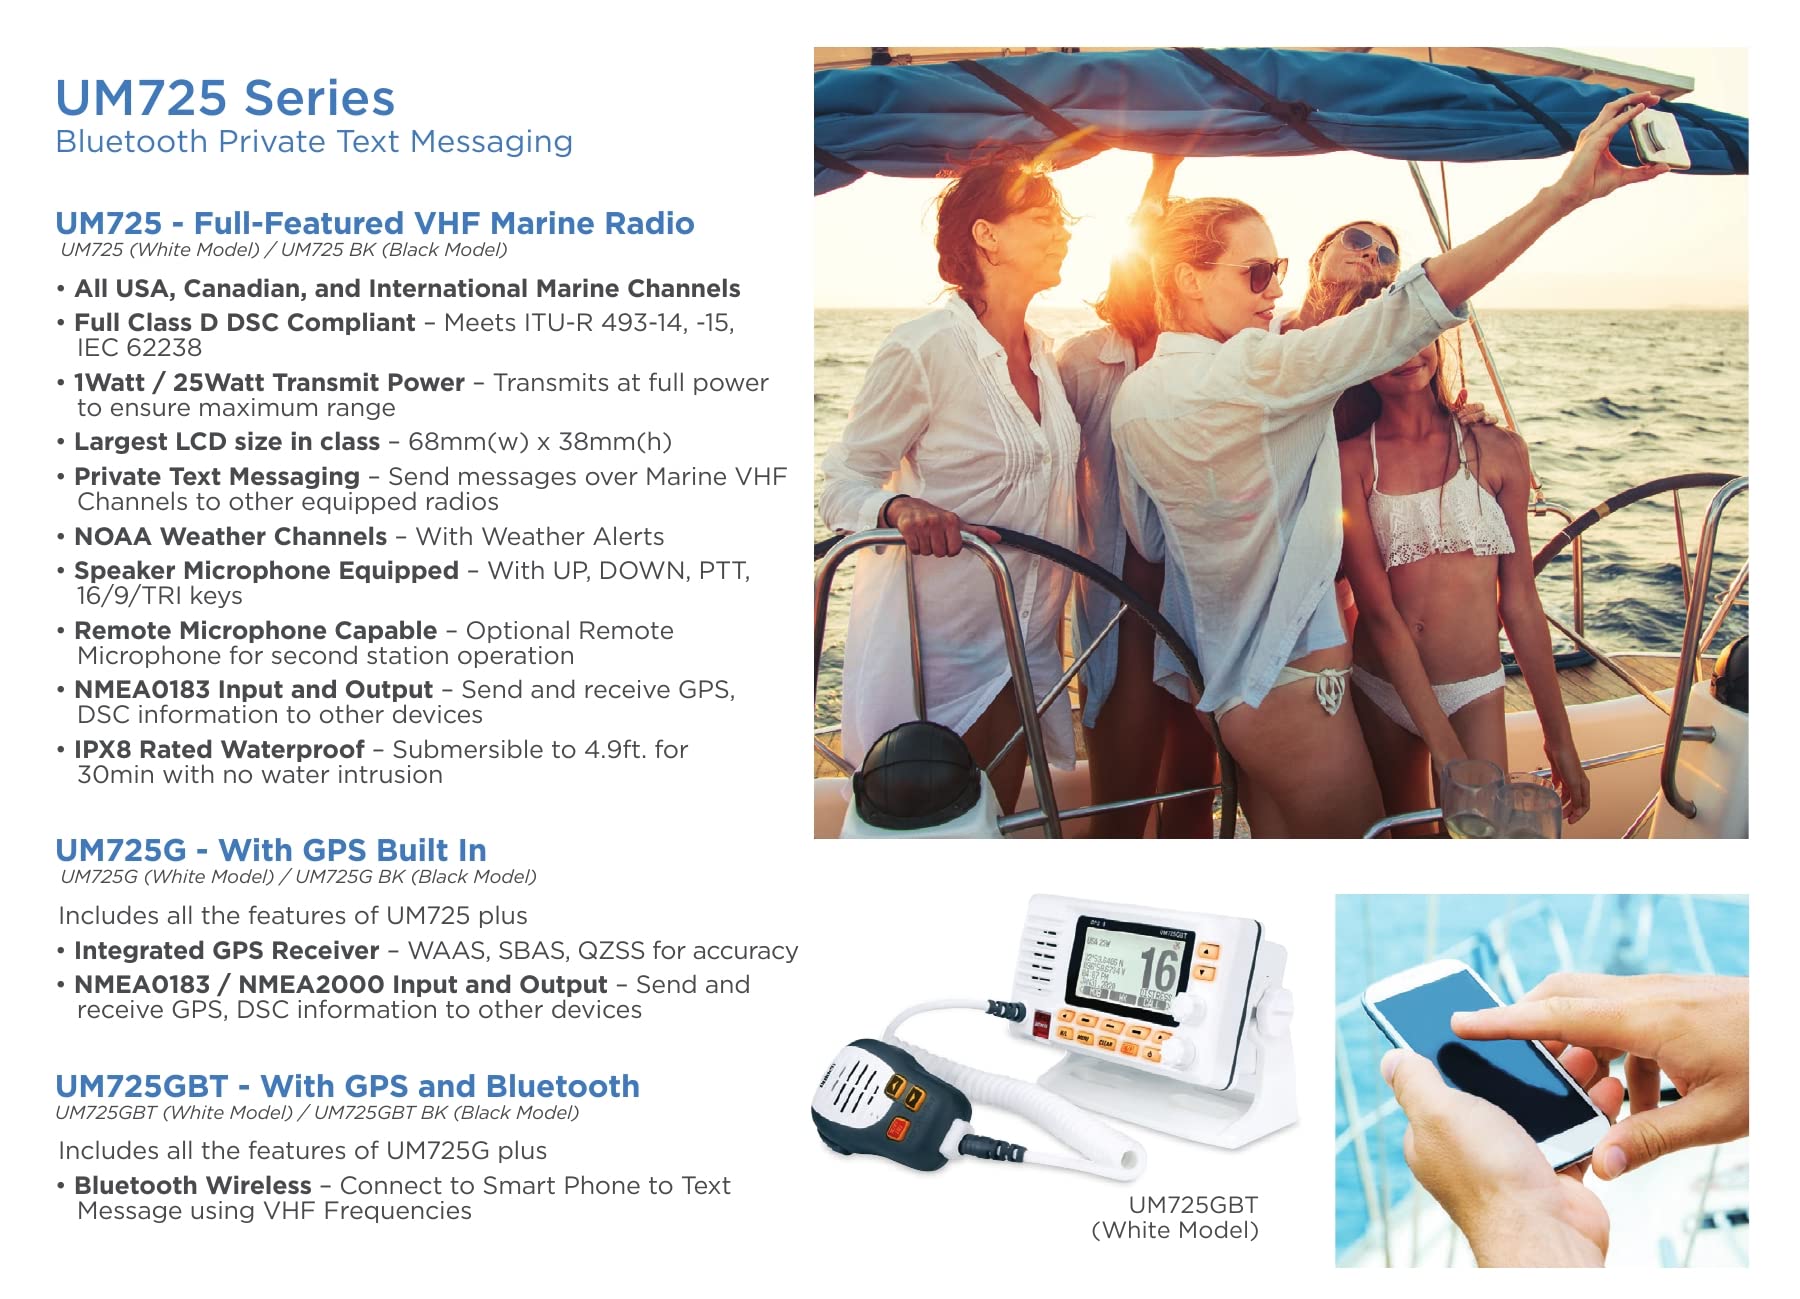 Uniden UM725GBT Marine VHF Radio, All USA, Canada, and Intl. Marine Channels, 1Watt/25Watt Transmit Power, Largest LCD Screen in Class, NOAA Weather Channels, Speaker Mic, GPS Built-in, and Bluetooth